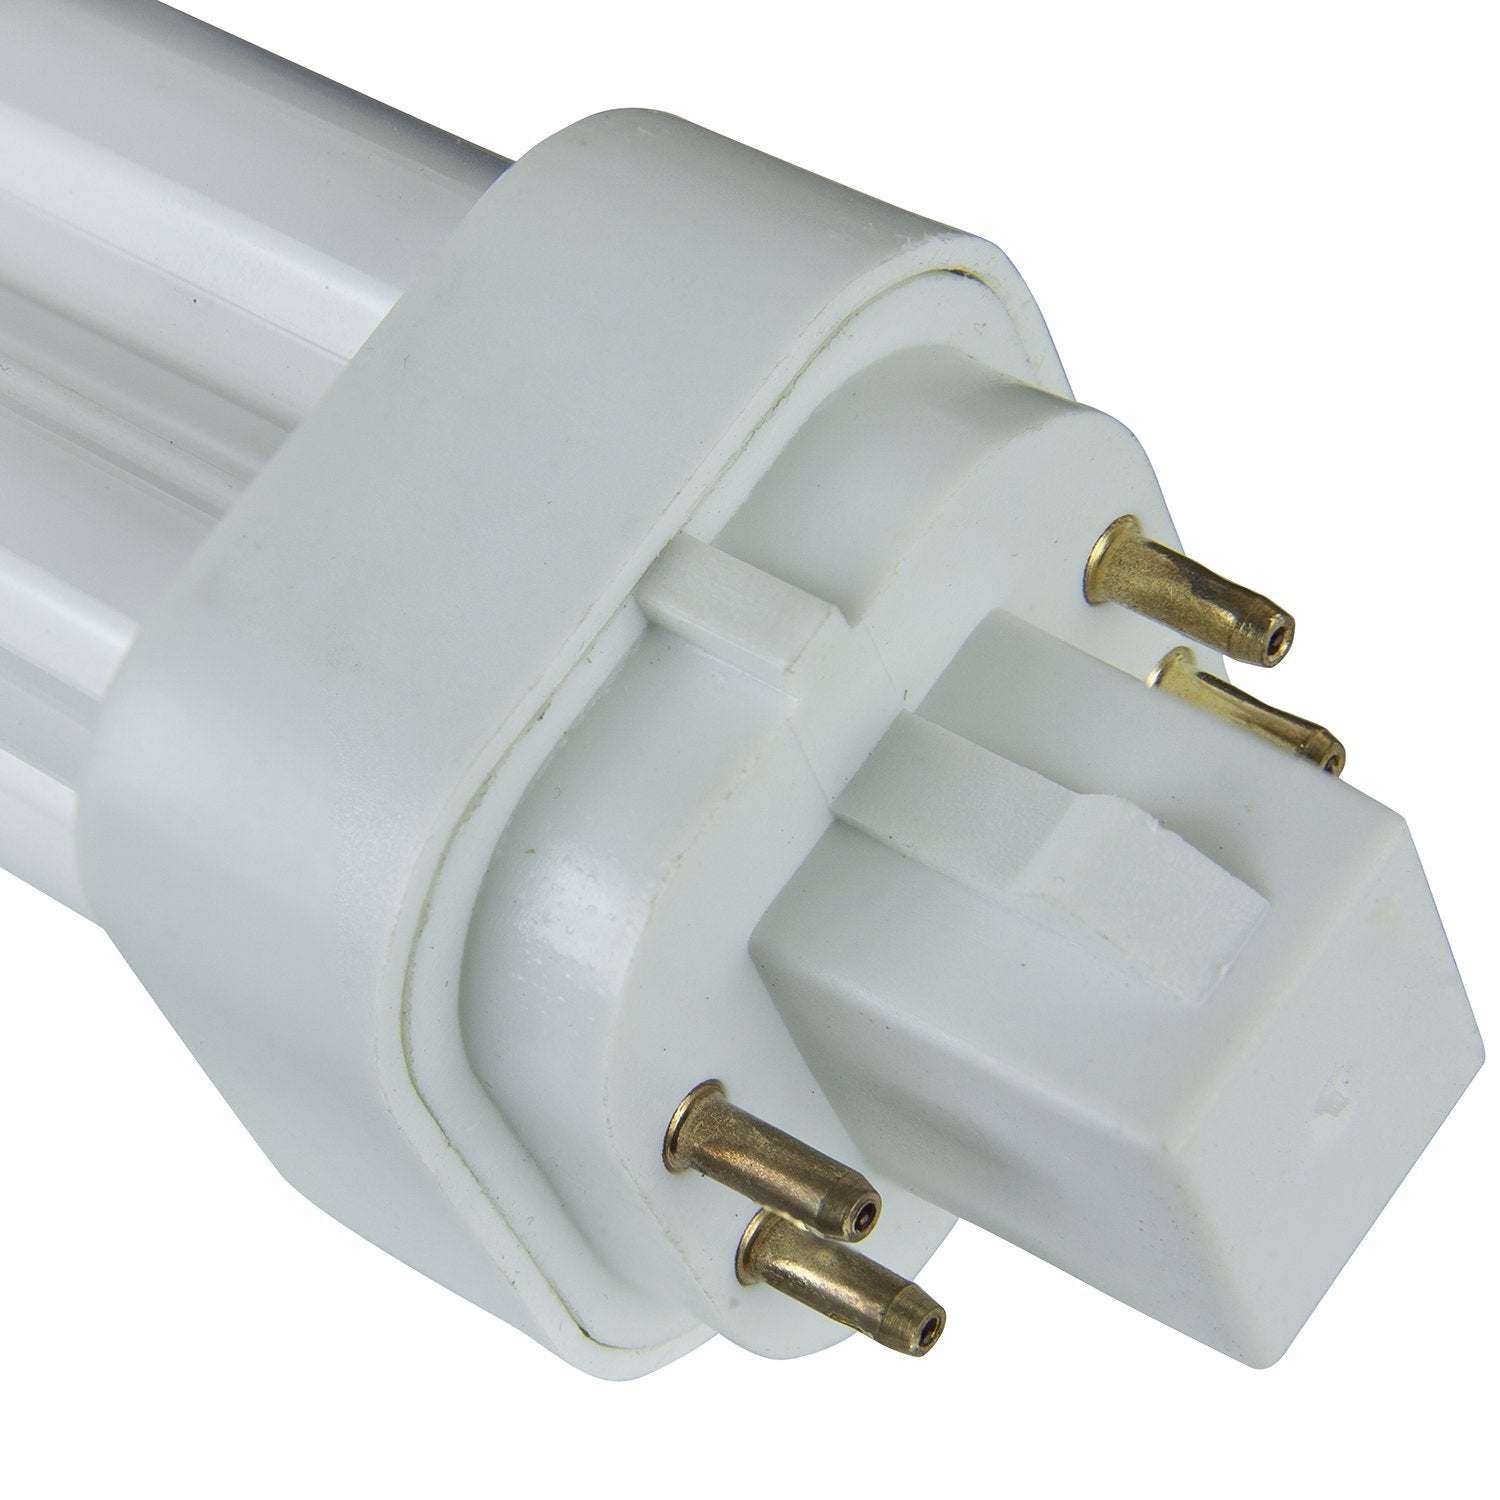 Sunlite 13-Watt Compact Fluorescent Plug-in 4-Pin Light Bulb  - Like New